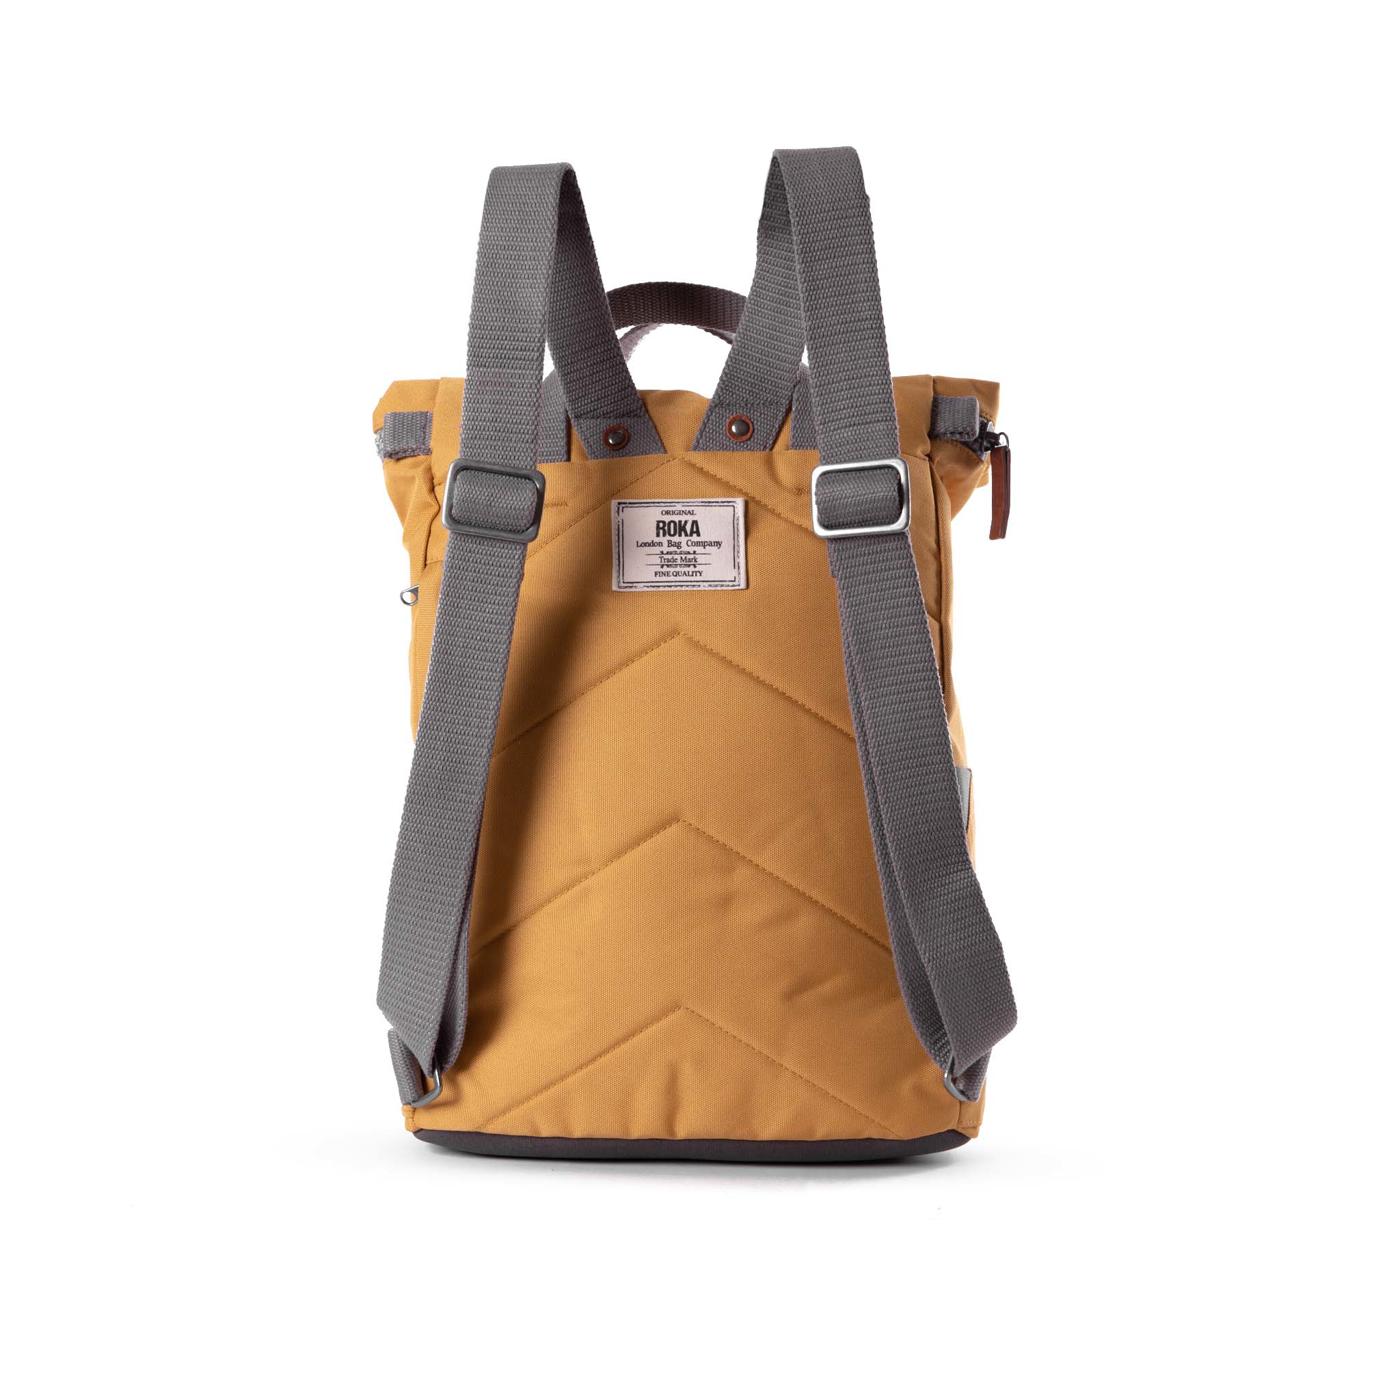 Roka Finchley Medium Backpack - Flax